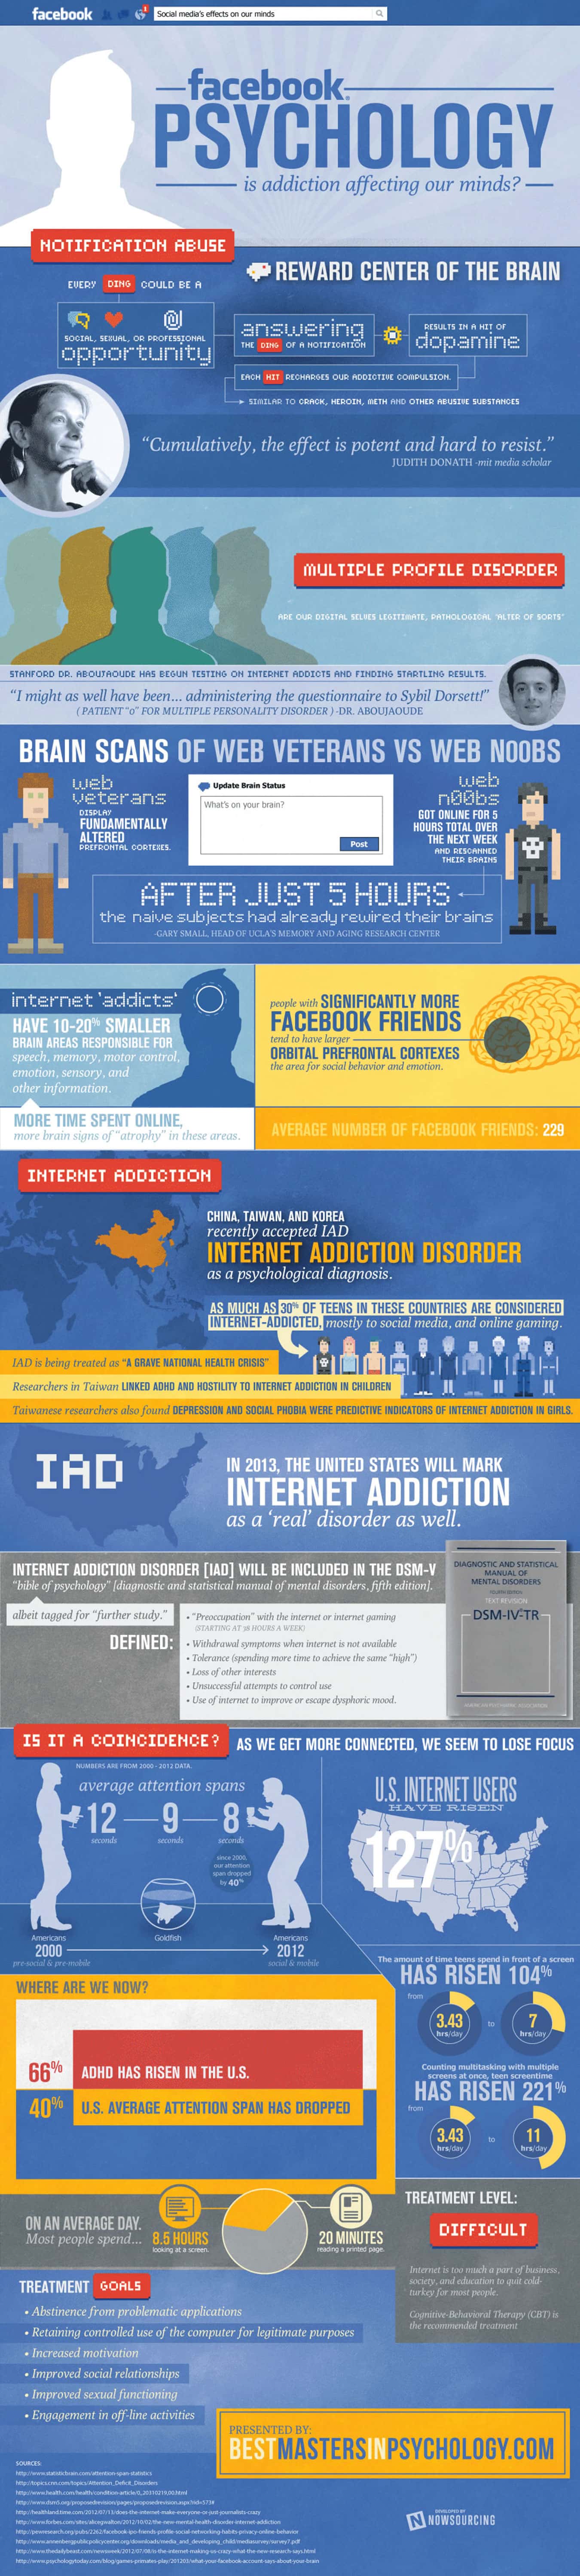 01_infographic_socialmedia